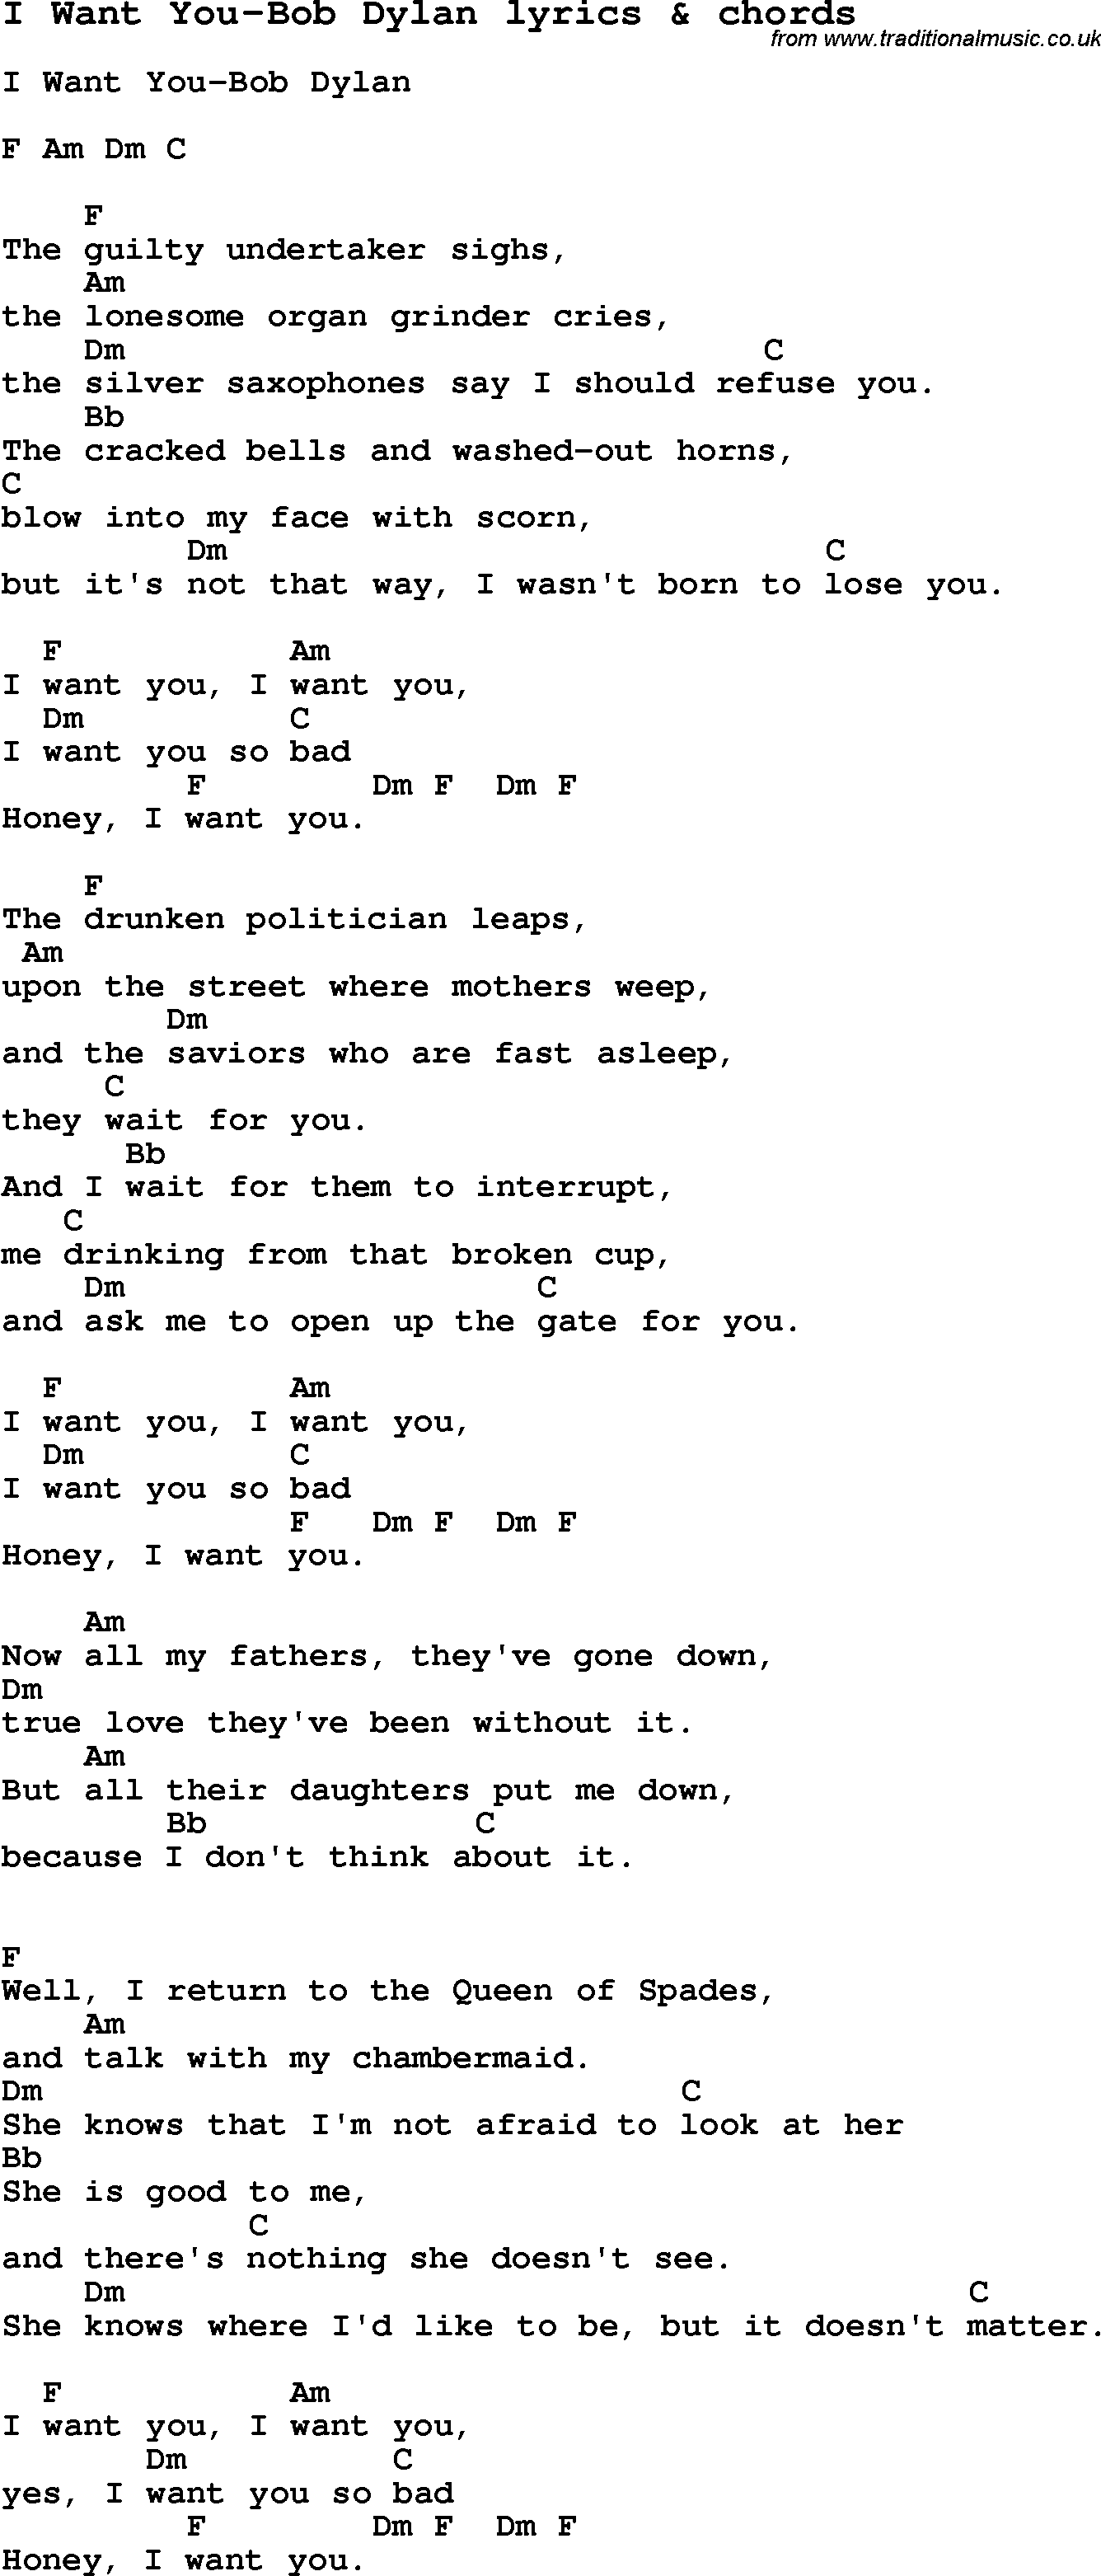 Love Song Lyrics for: I Want You-Bob Dylan with chords for Ukulele, Guitar Banjo etc.